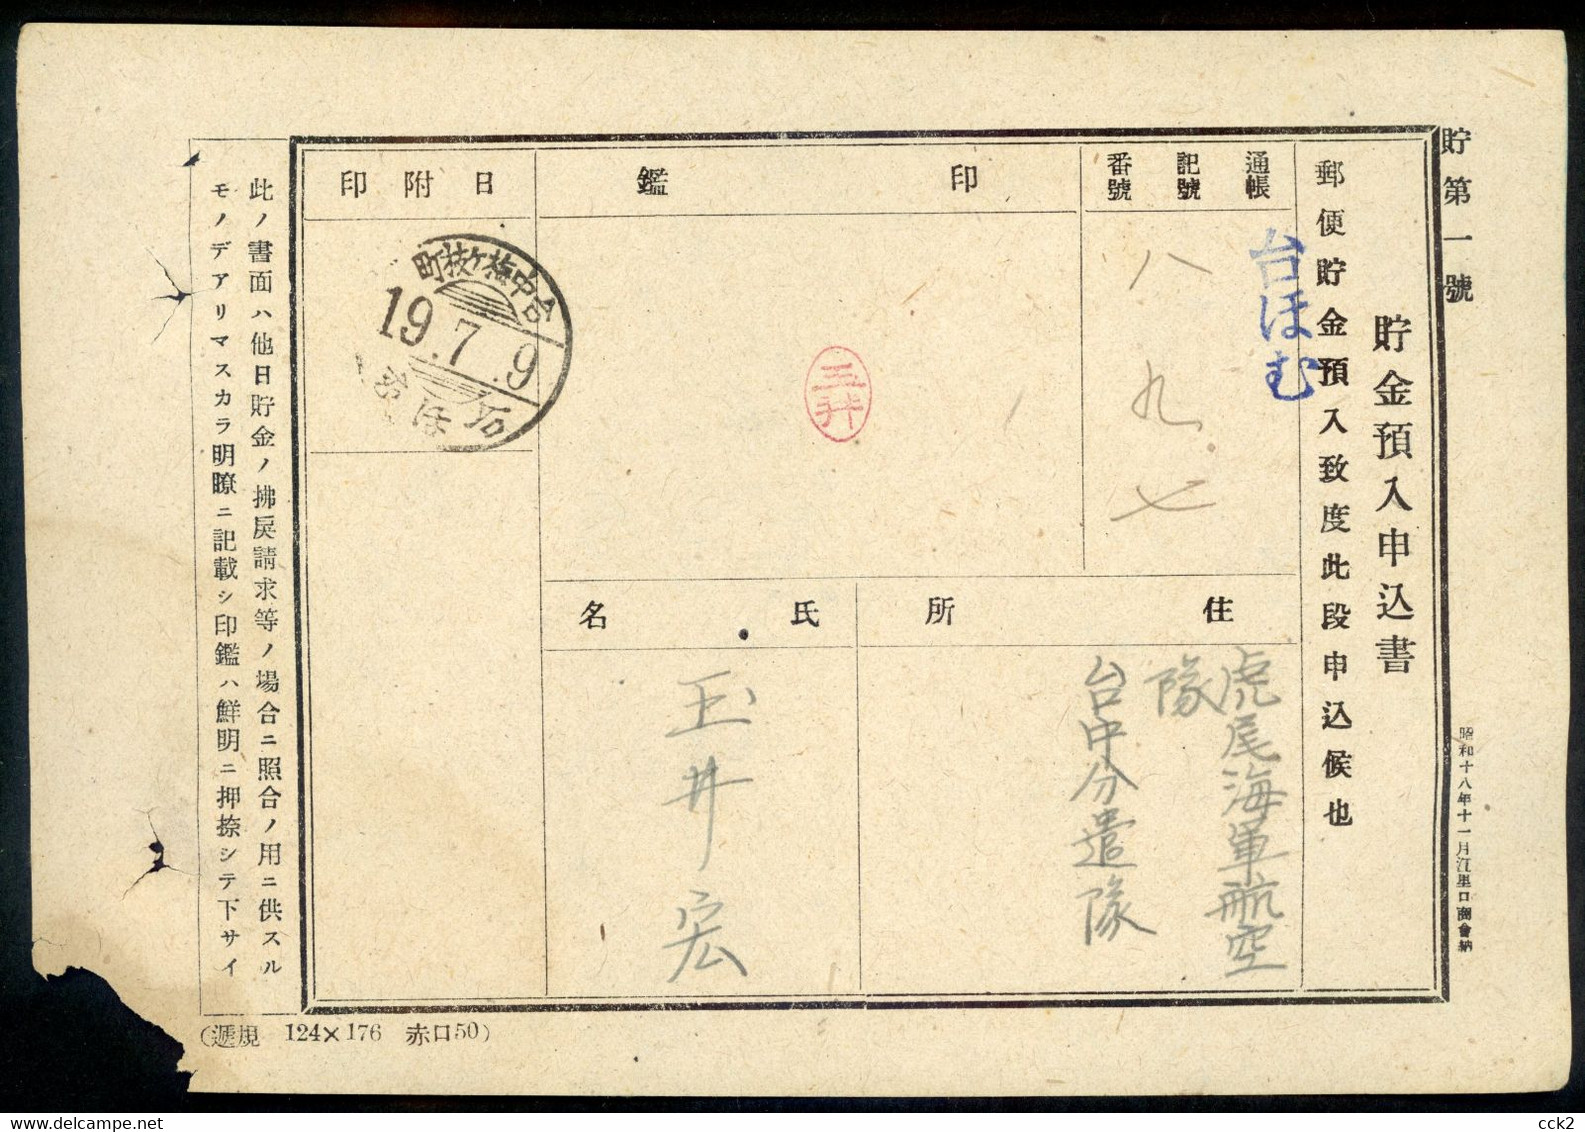 JAPAN OCCUPATION TAIWAN- Postal Convenience Savings Fund Advance Deposit Application Form (1) - 1945 Japanese Occupation